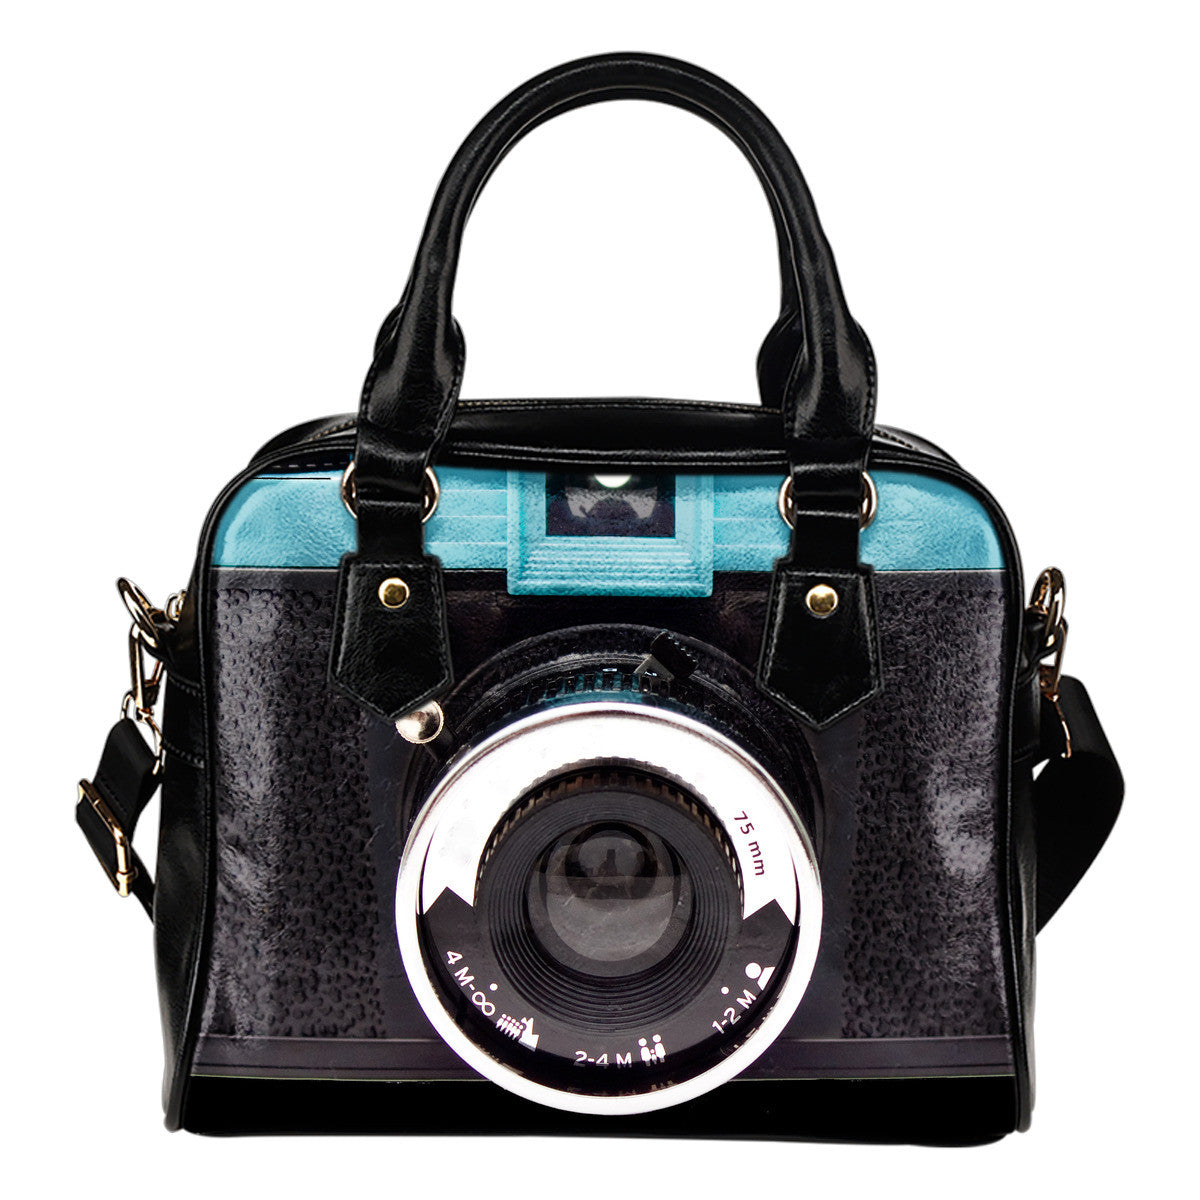 Cuyana Camera Bag Leather Crossbody Purse | eBay